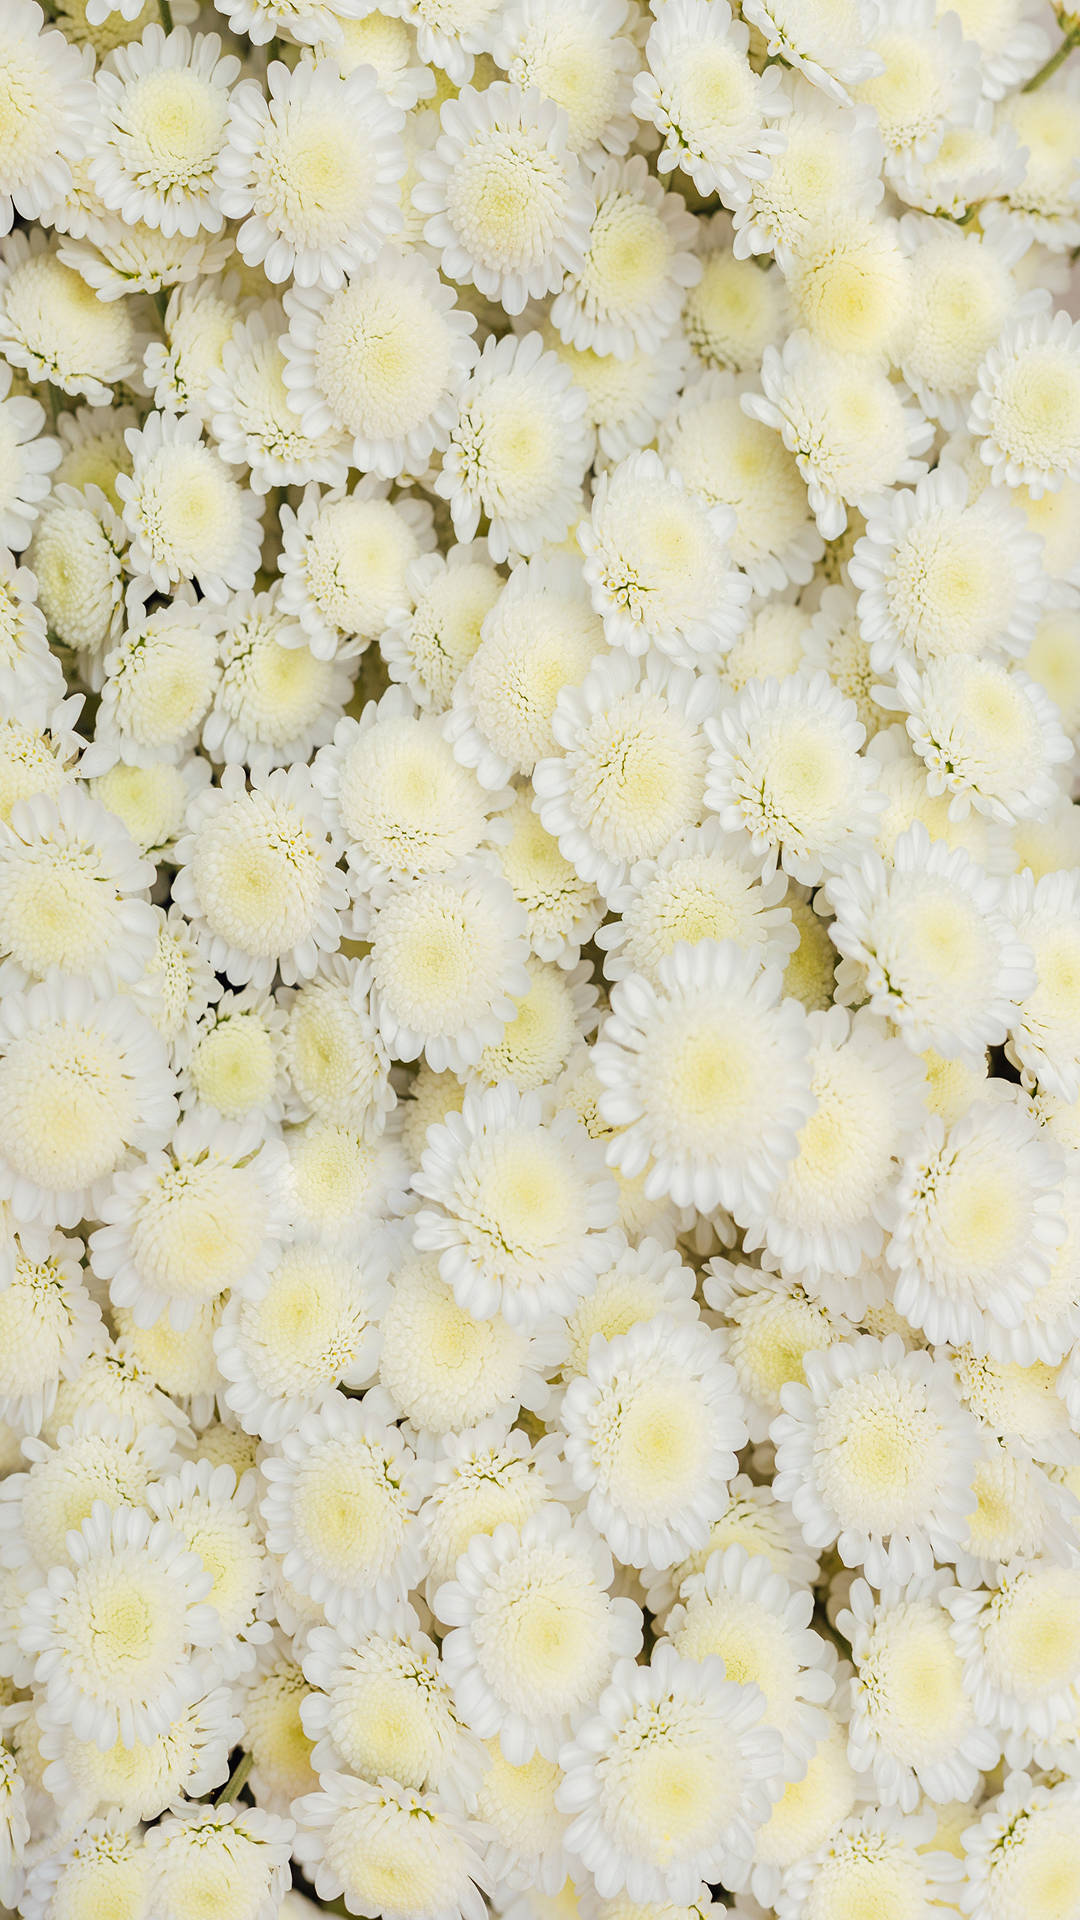 Instagram Story Hybrid White Daisy Flowers Background